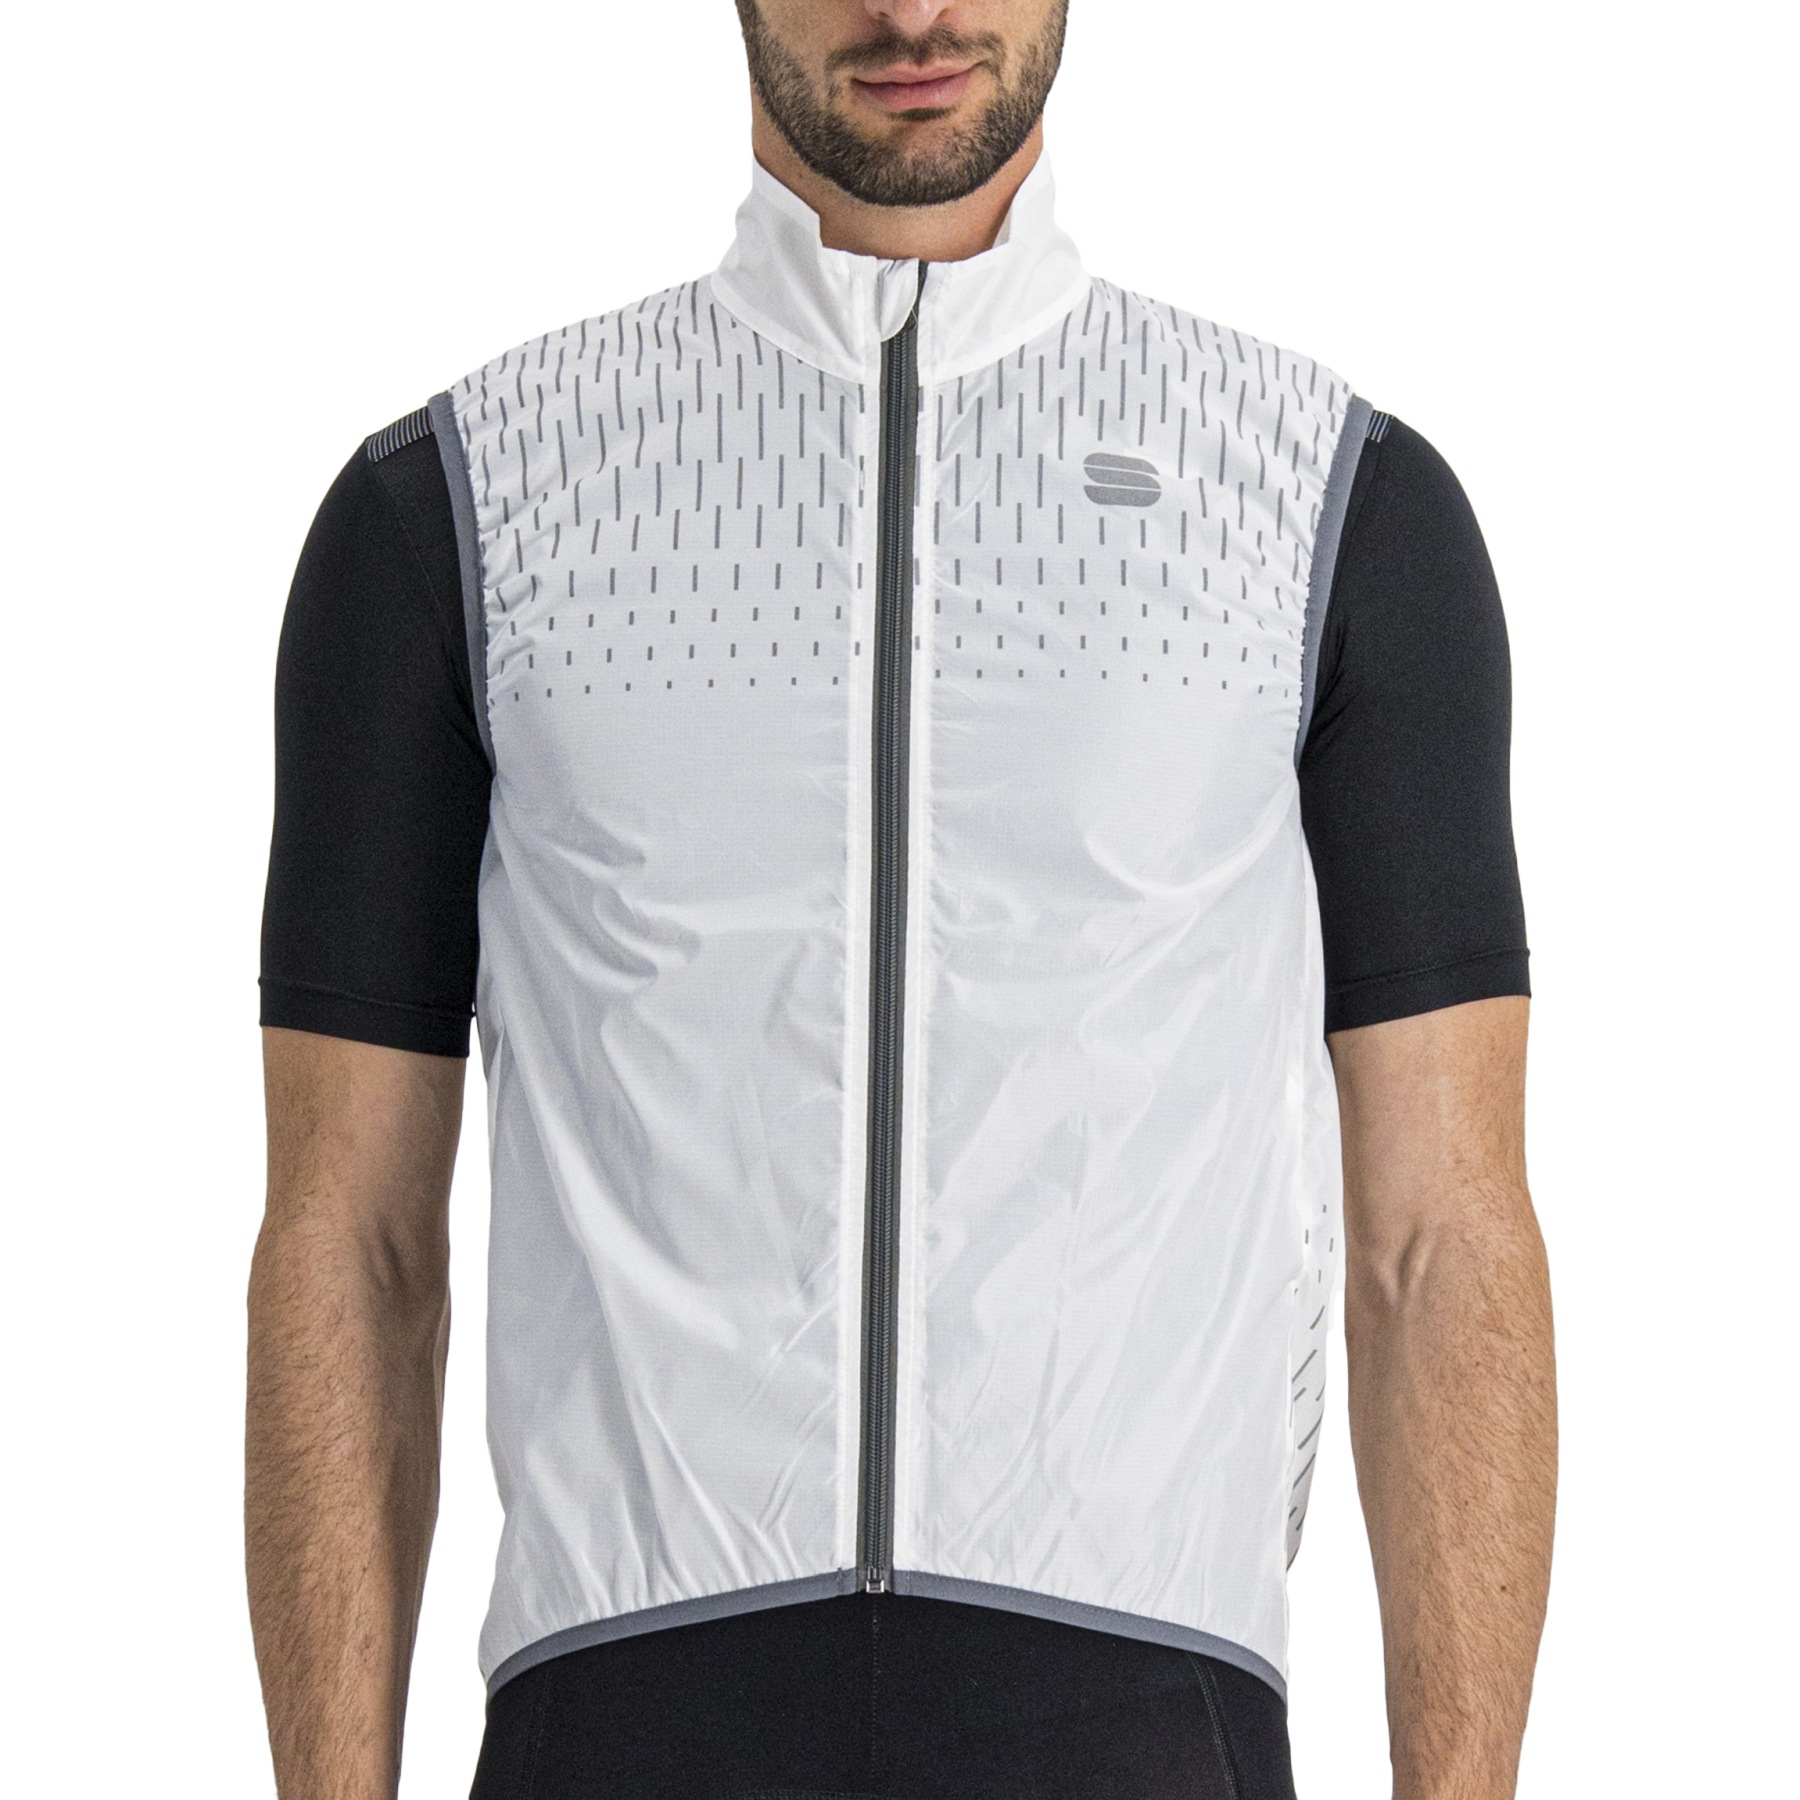 https://images.bike24.com/i/mb/ac/49/3c/sportful-reflex-cycling-vest-101-white-1-1231031.jpg